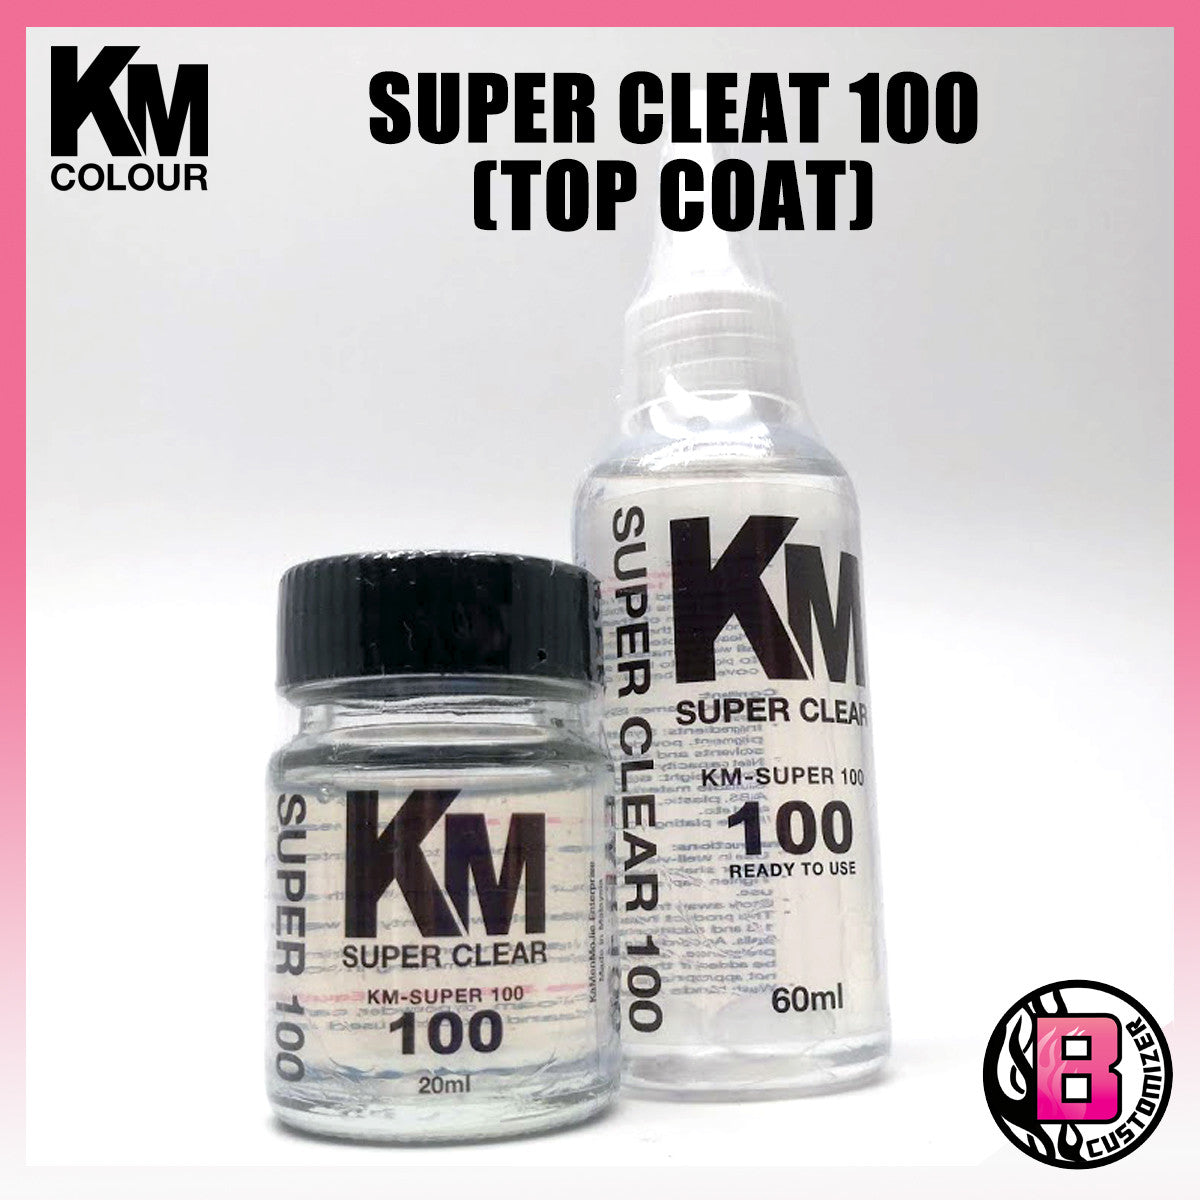 KM Colour Super Clear 100 ( Top Coat)